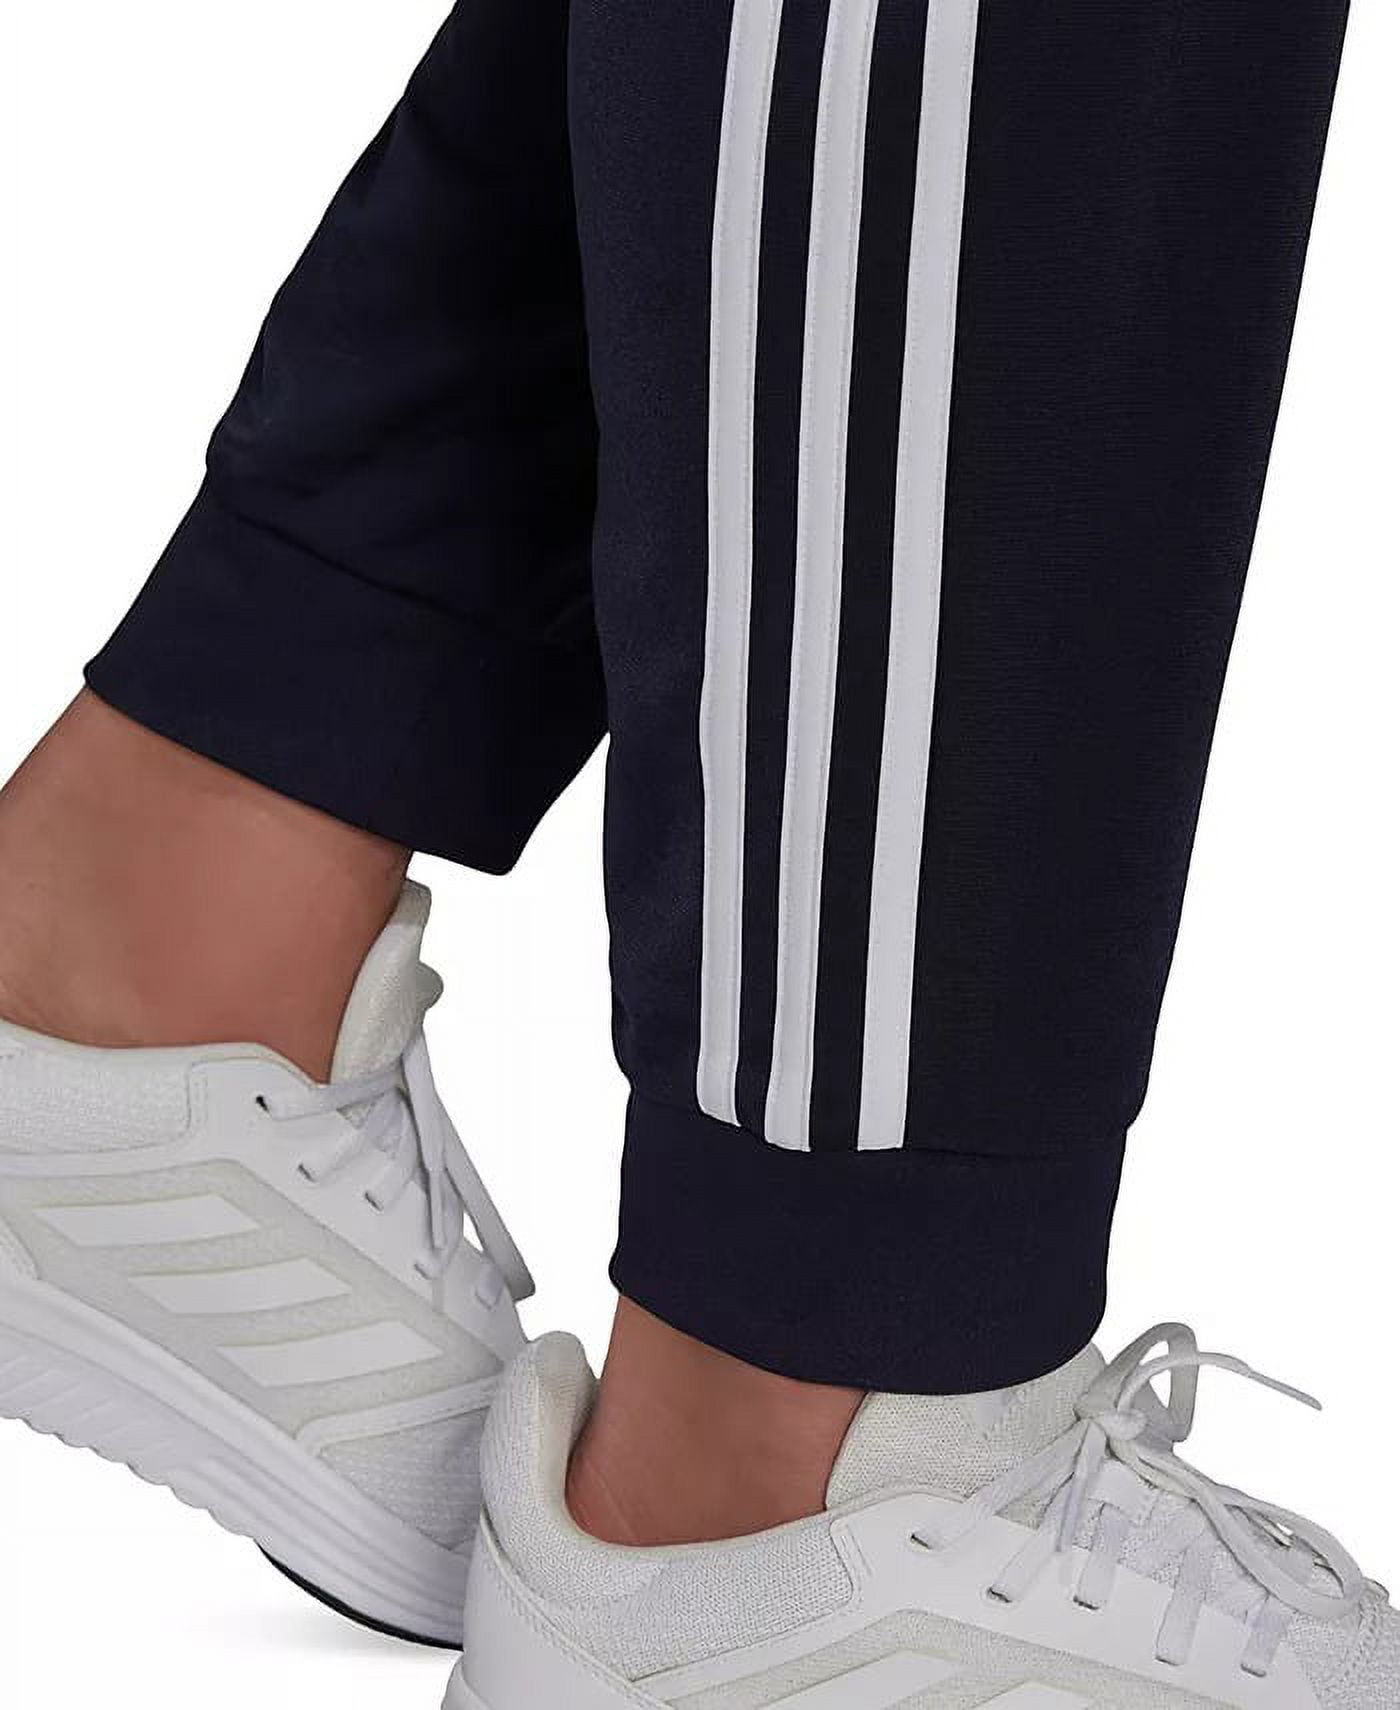 Adidas LEGEND INK/WHITE Men's Tricot Jogger Pants, US X-Large